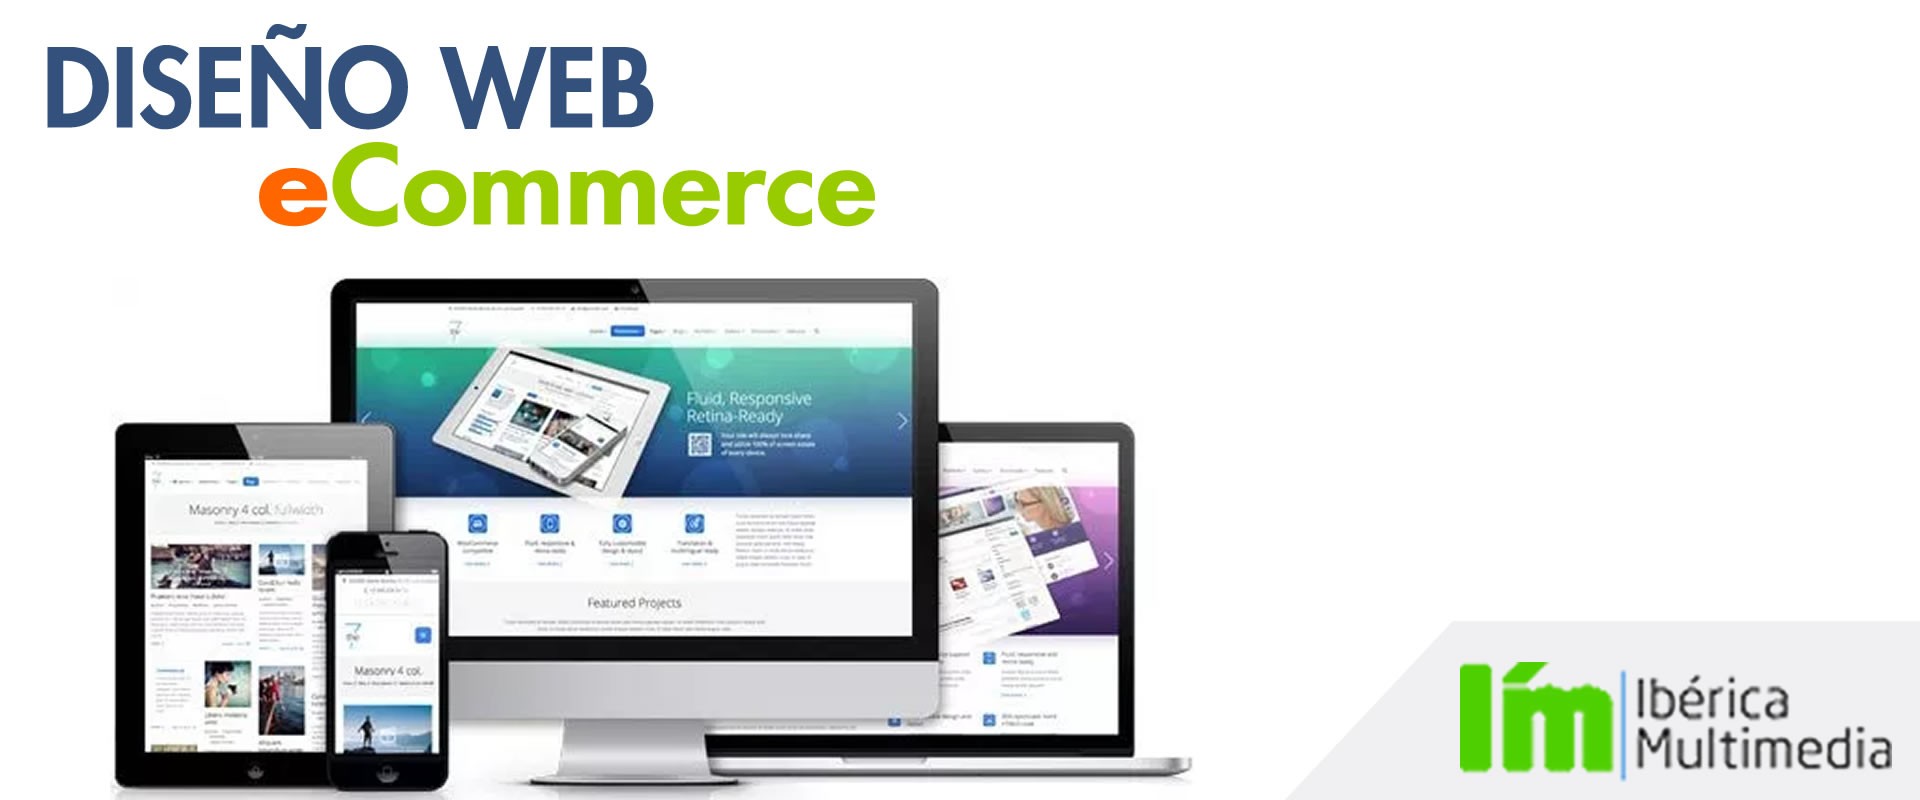 Web eCommerce